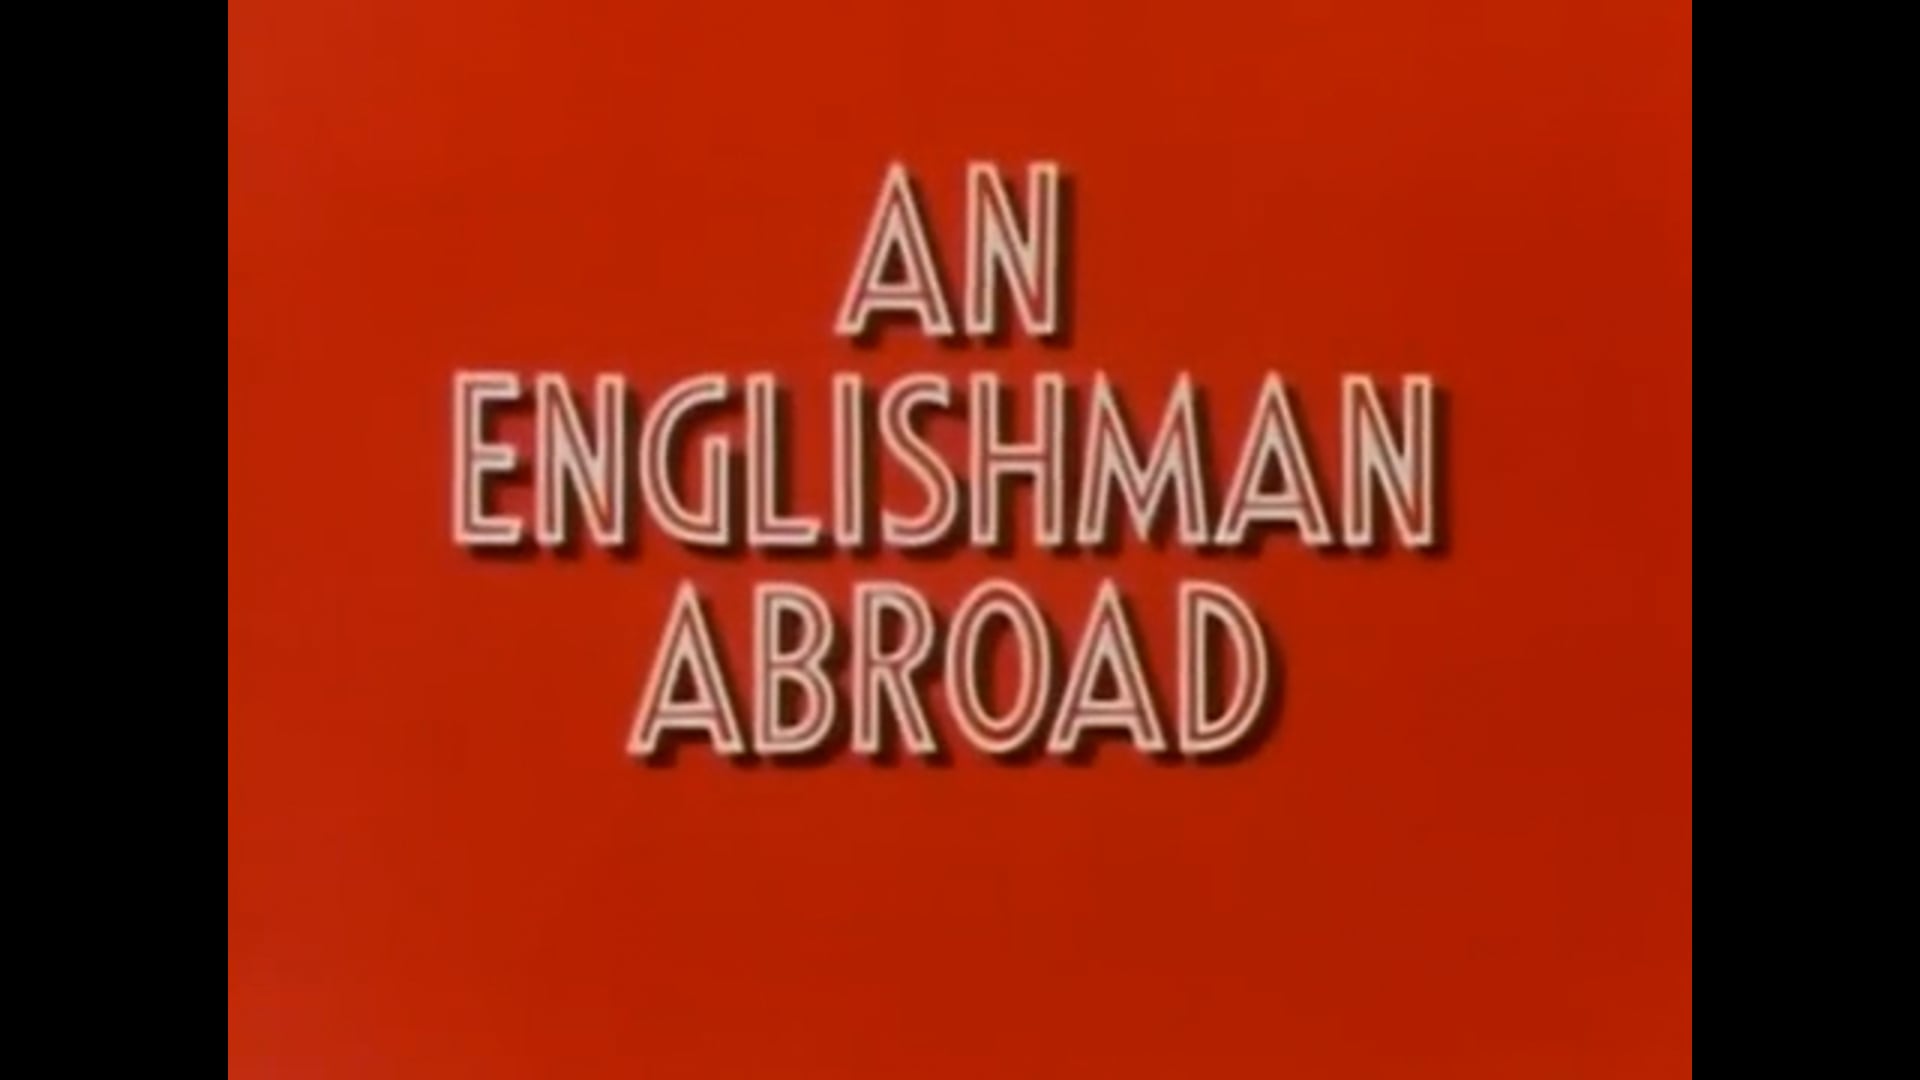 An Englishman Abroad (1983) (TV Movie)